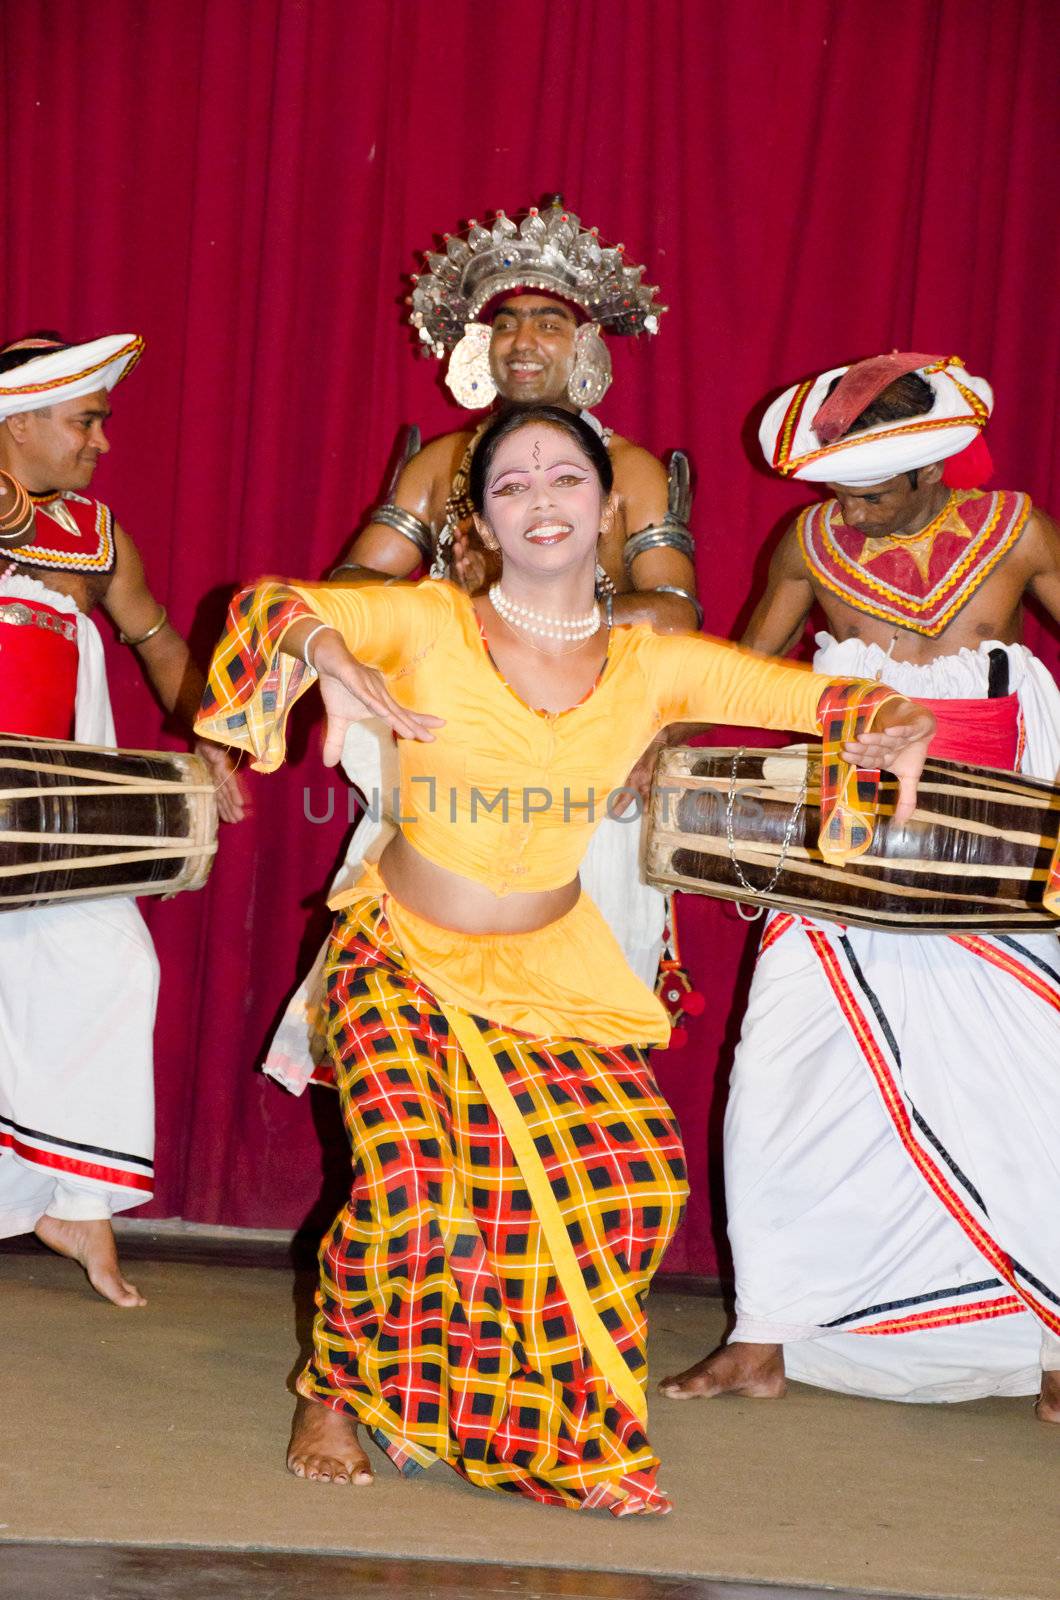 Kandy, Sri Lanka, December 7, 2011. Folk dances in the local theater scene.